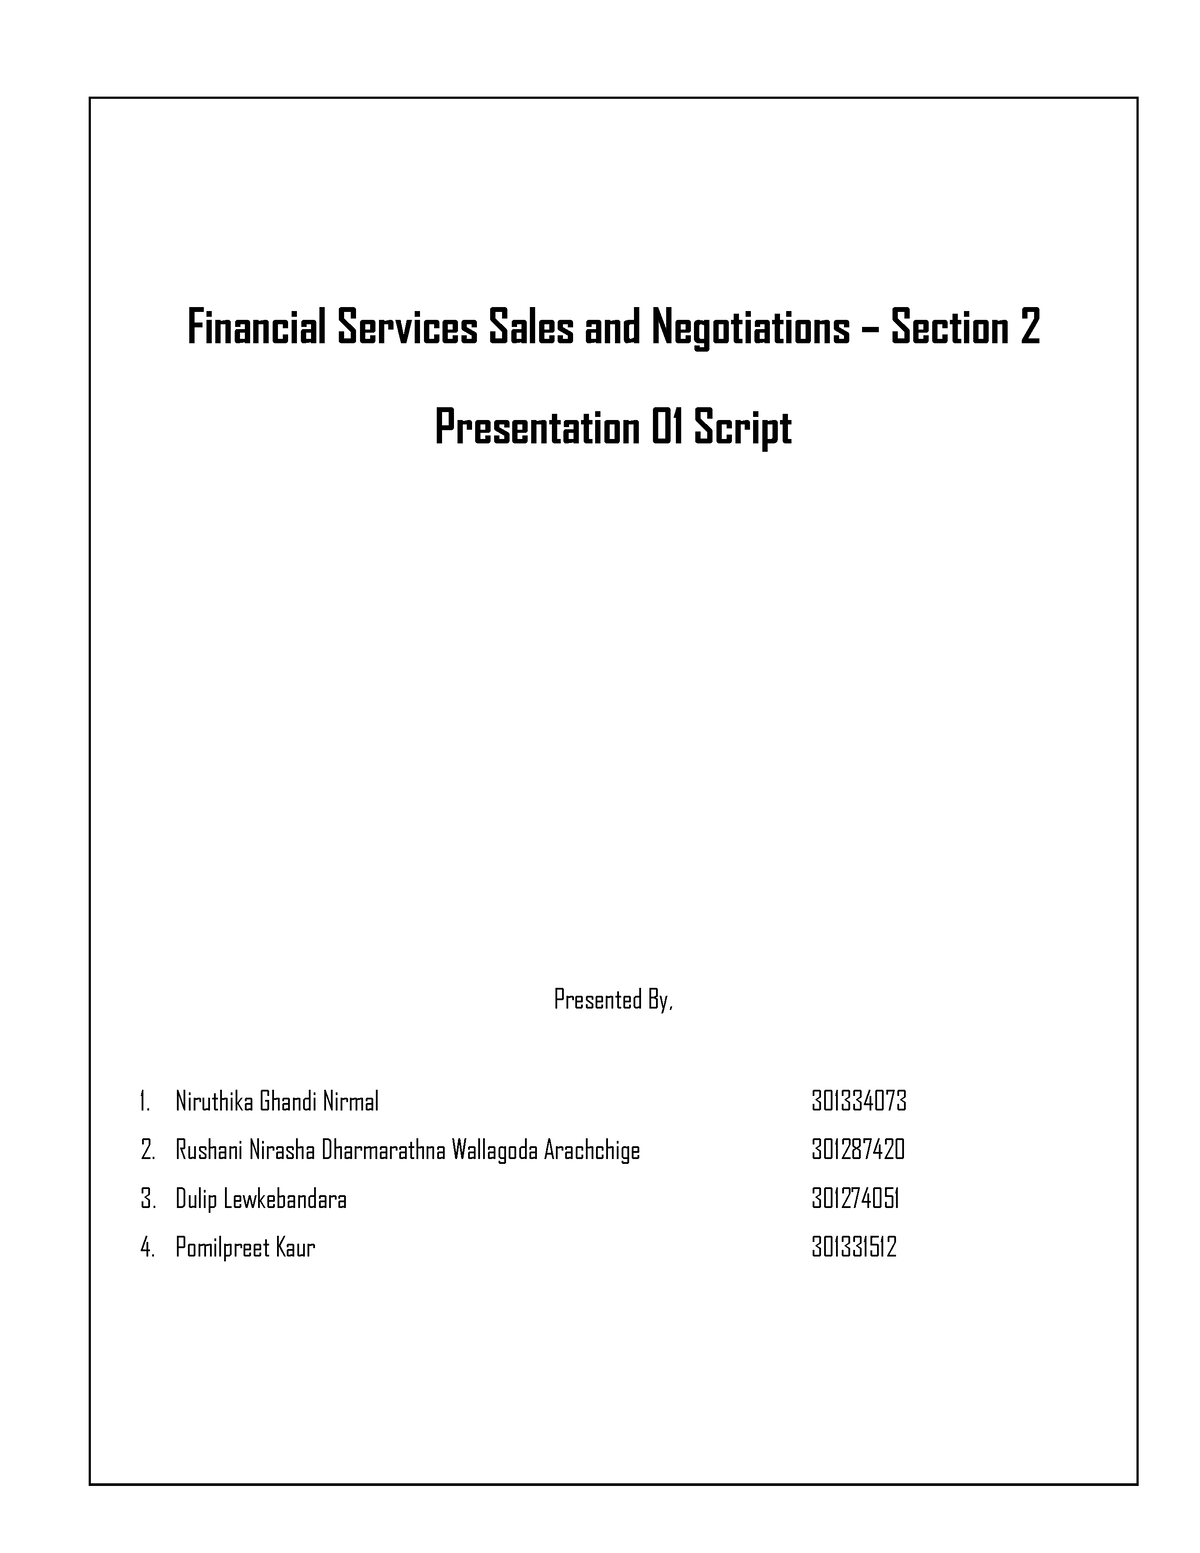 is sales presentation script financial information